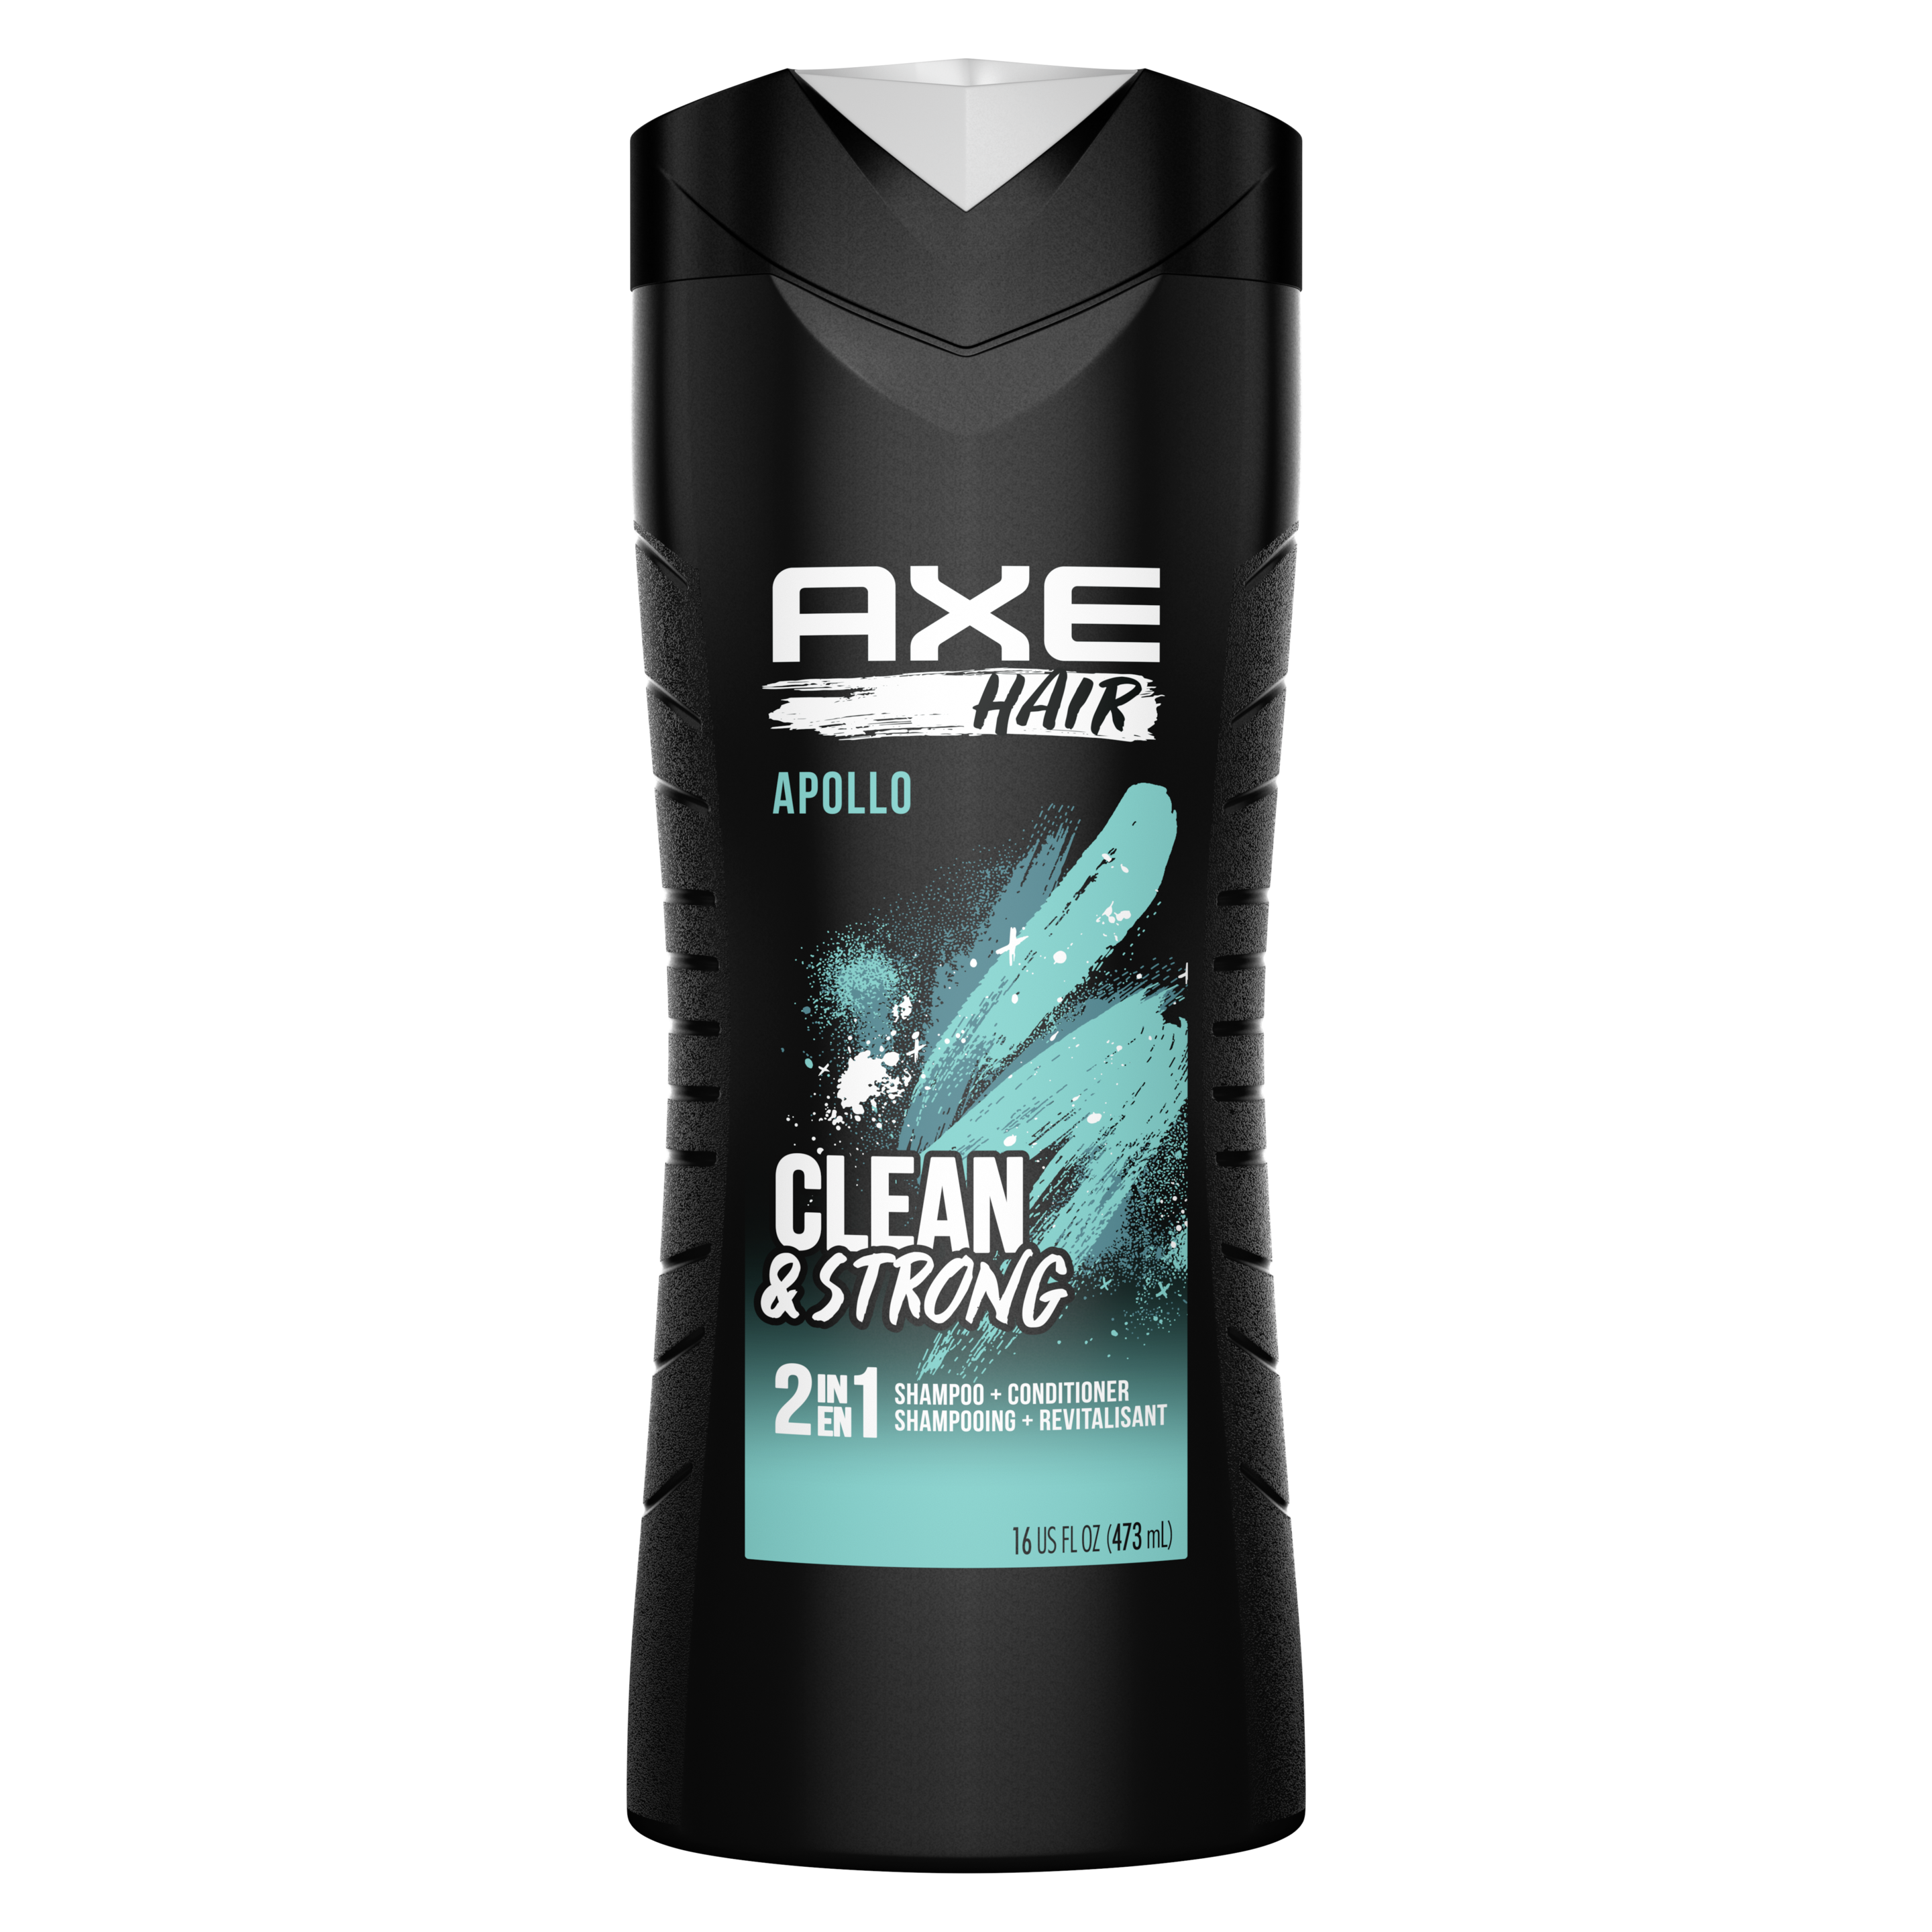 AXE Hair Apollo 2-in-1 Shampoo and Conditioner